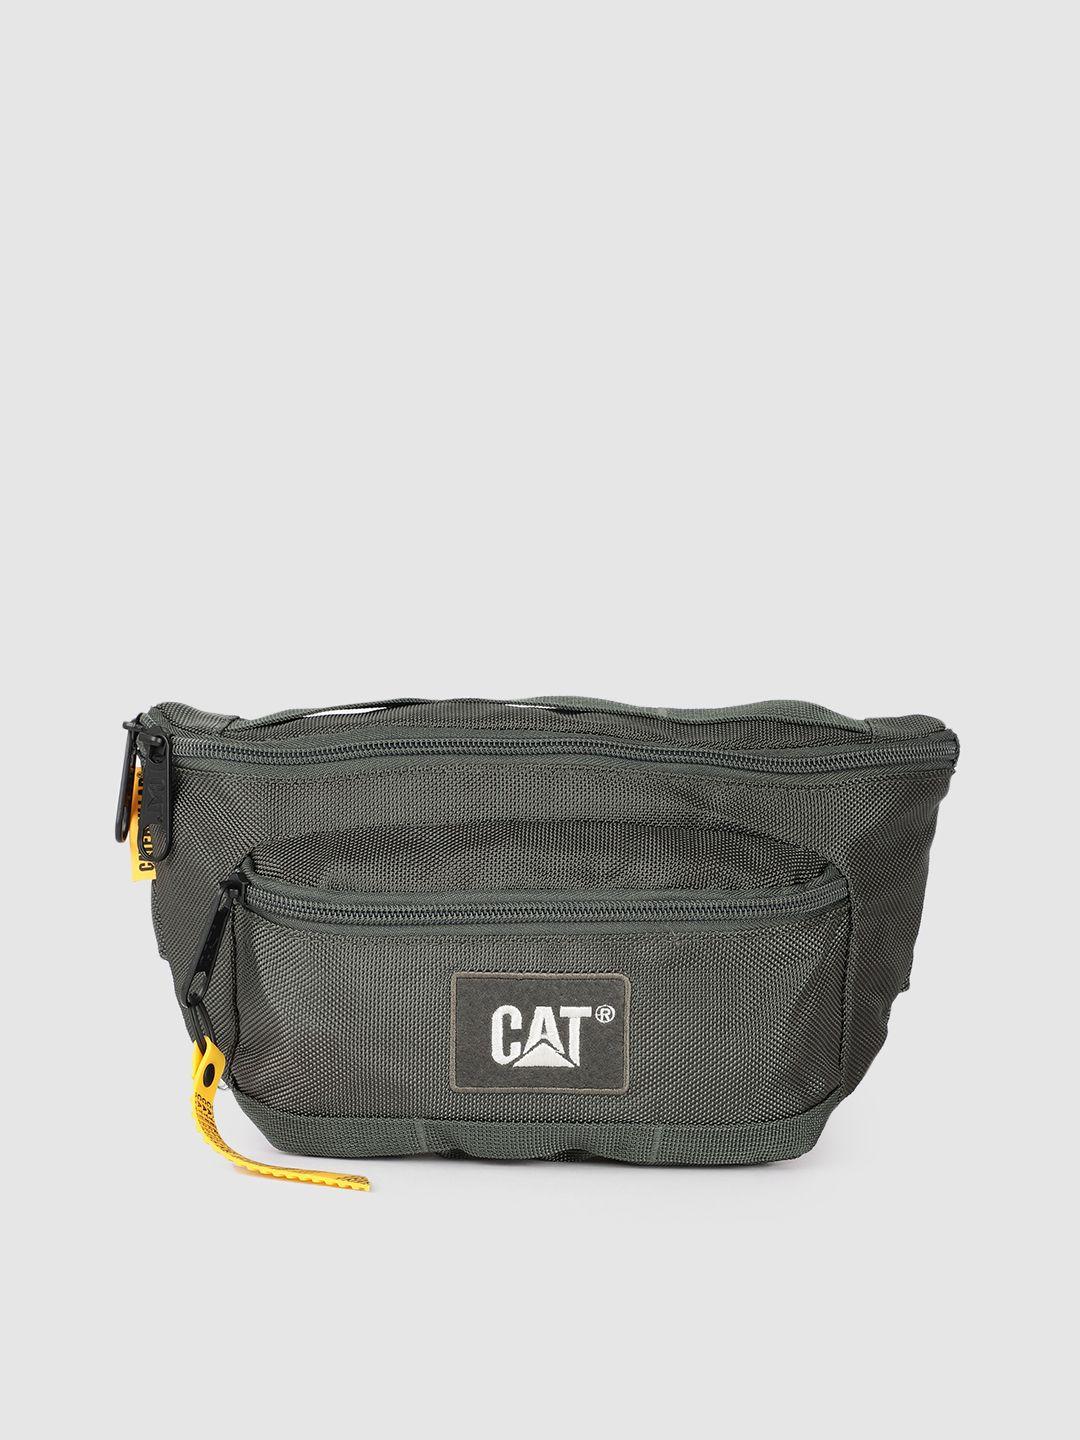 cat unisex charcoal grey 3 liter waist pouch